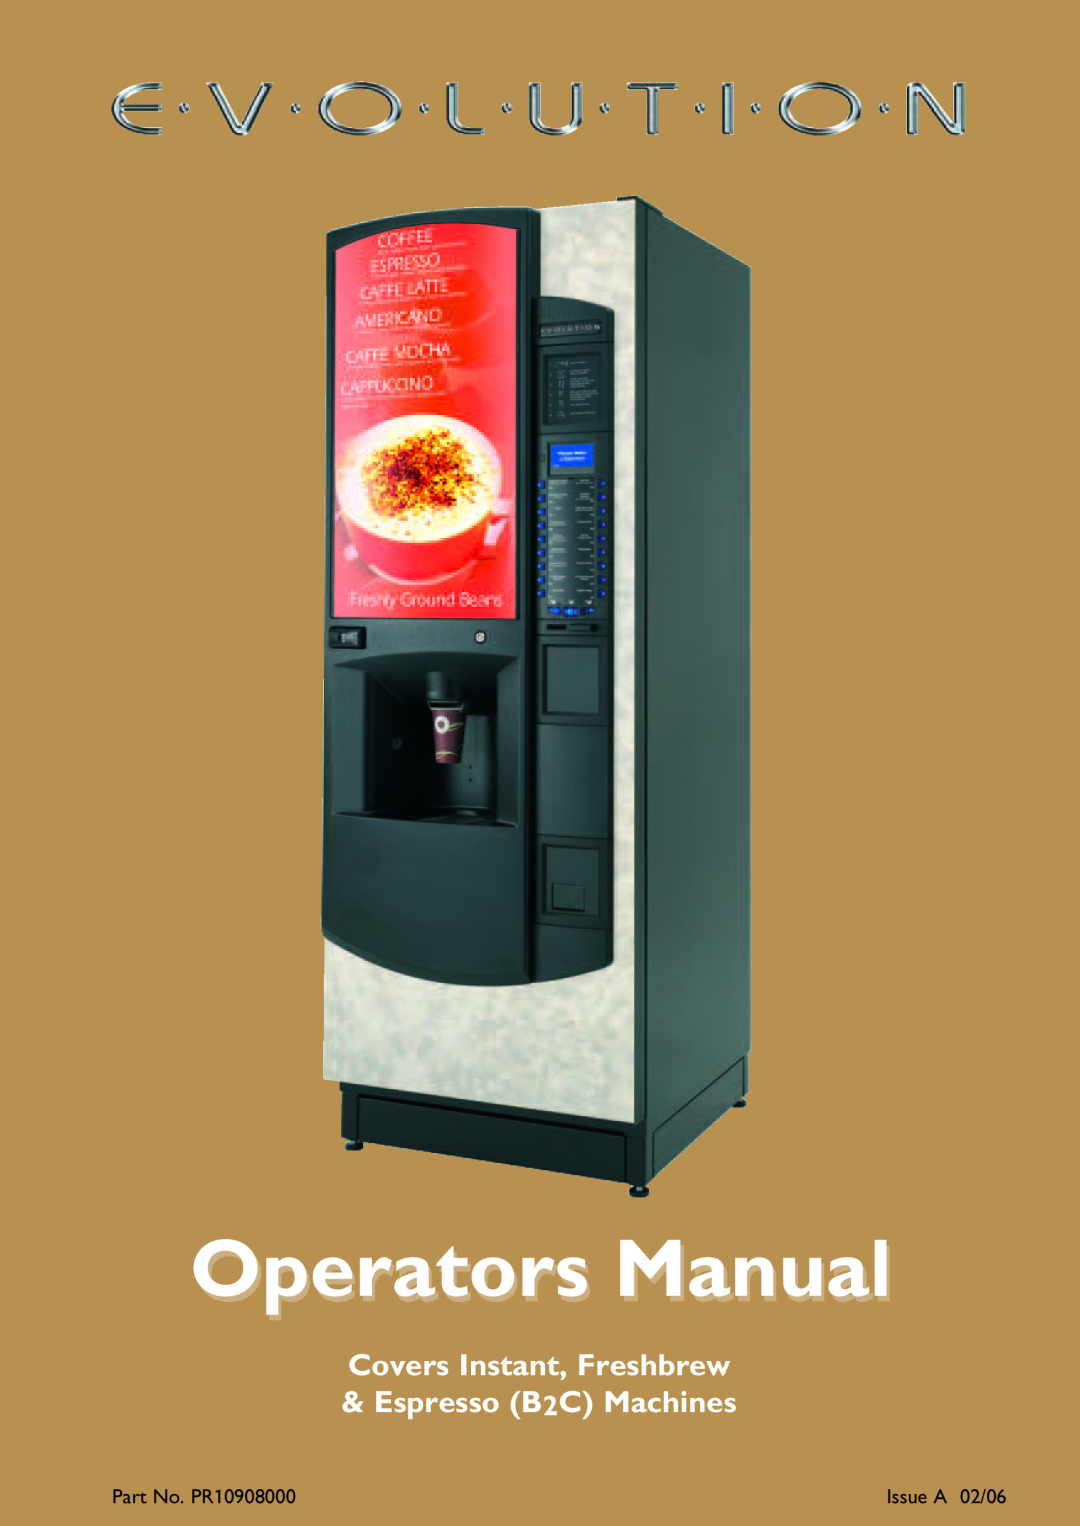 Evolution Technologies Instant, Freshbrew & Espresso (B2C) Machine manual Operators Manual, Part No. PR10908000 